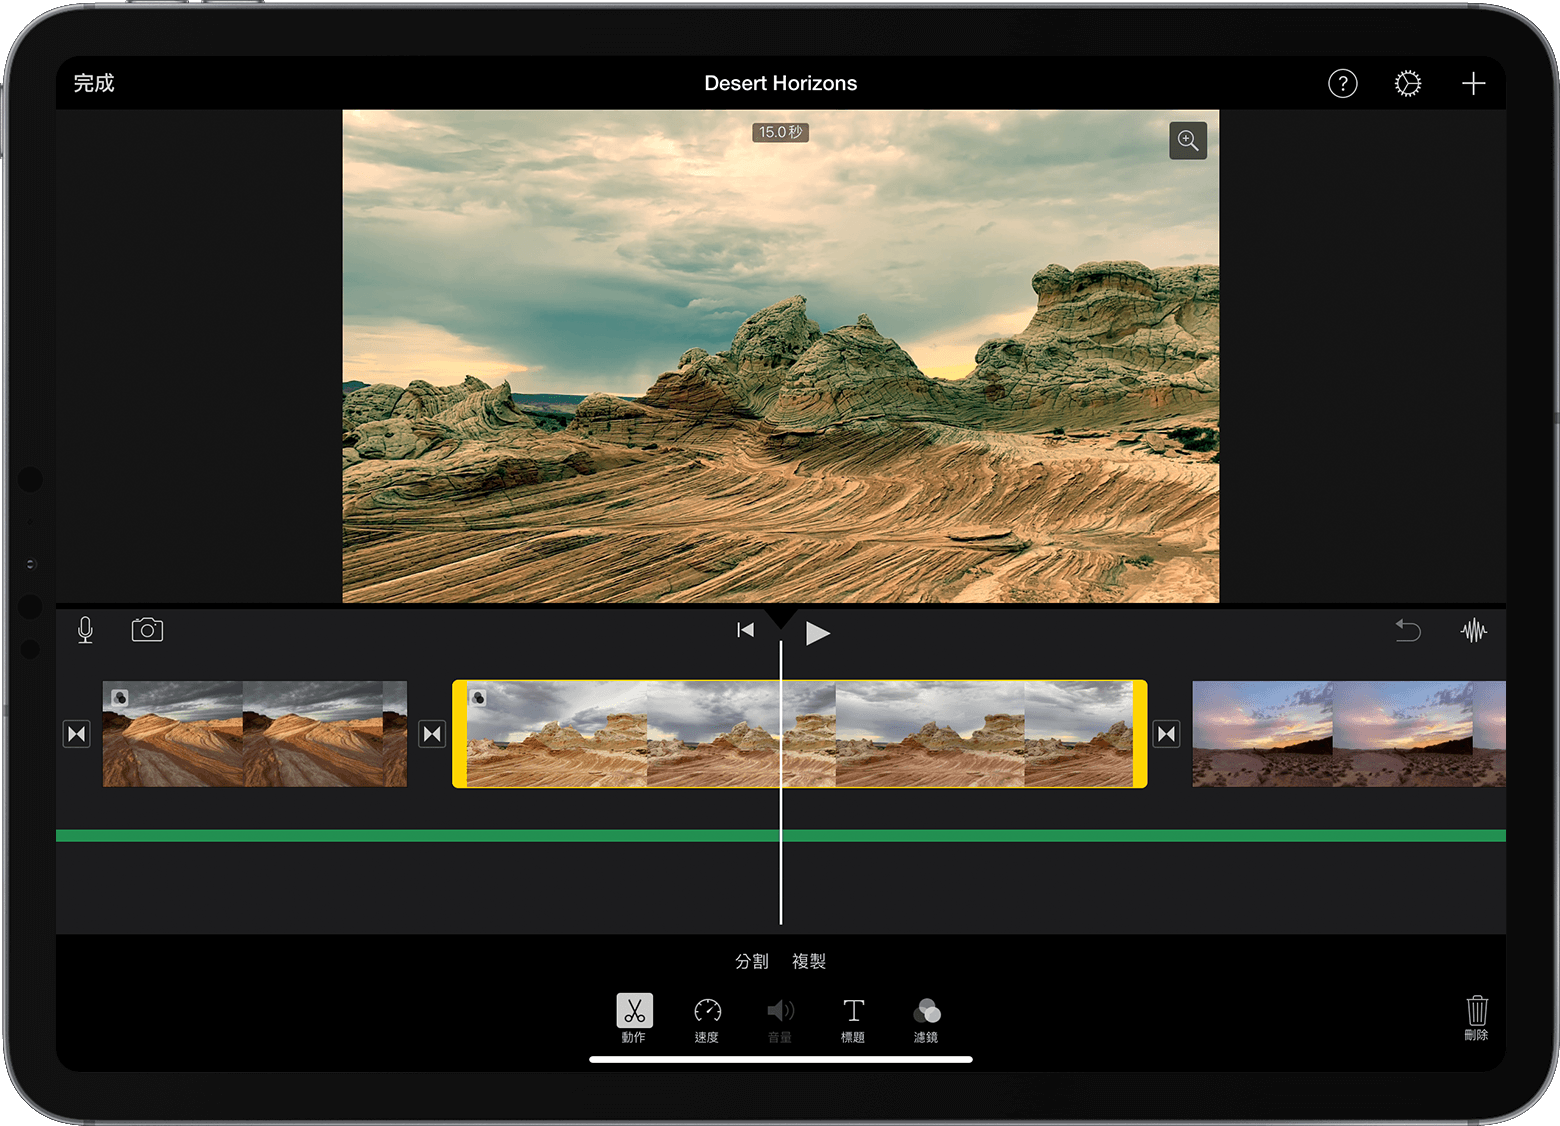 iPad iMovie 計畫案開啟，時間列中選取了一個影片剪輯片段